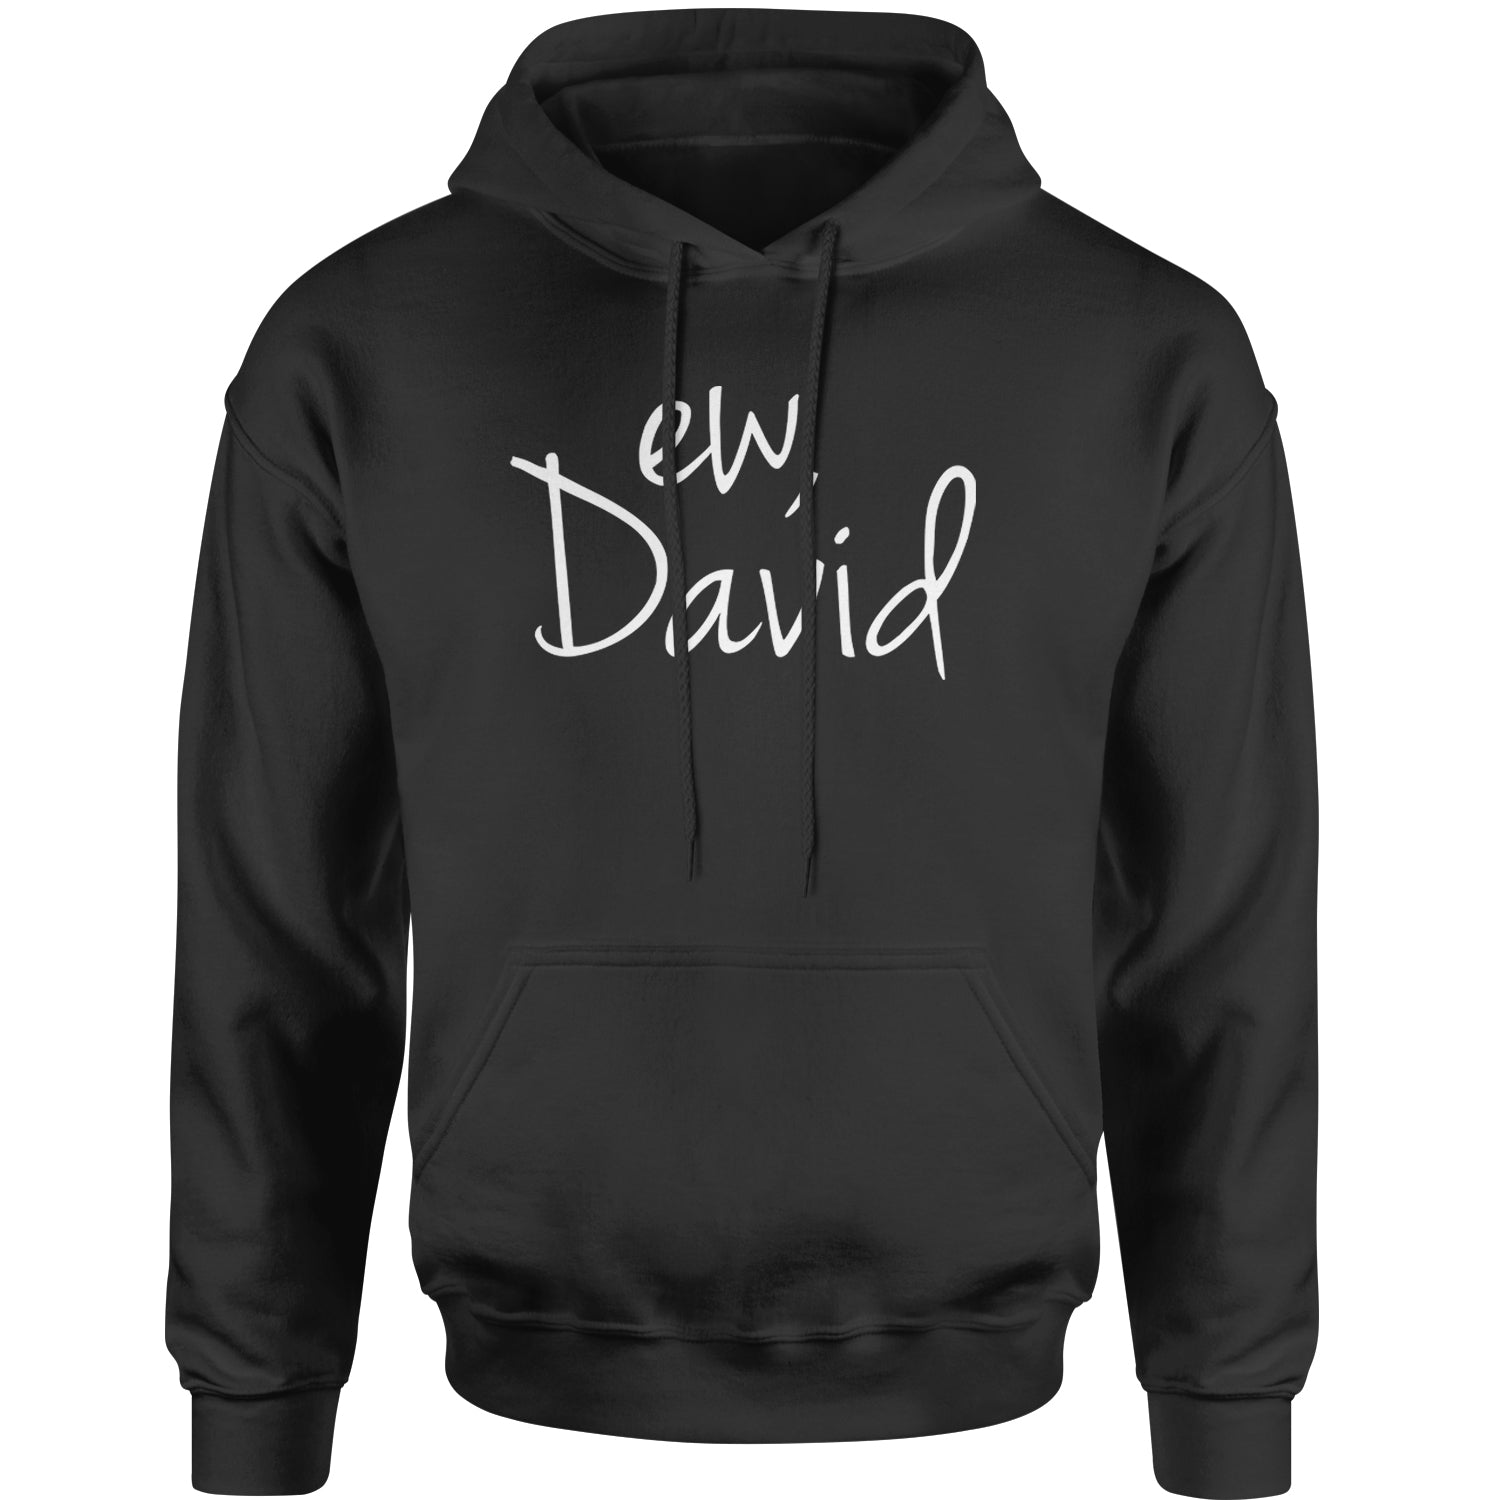 Ew, David Funny Creek TV Show Adult Hoodie Sweatshirt alexis, bit, david, eugene, levy, little, nonchalance, schitt by Expression Tees